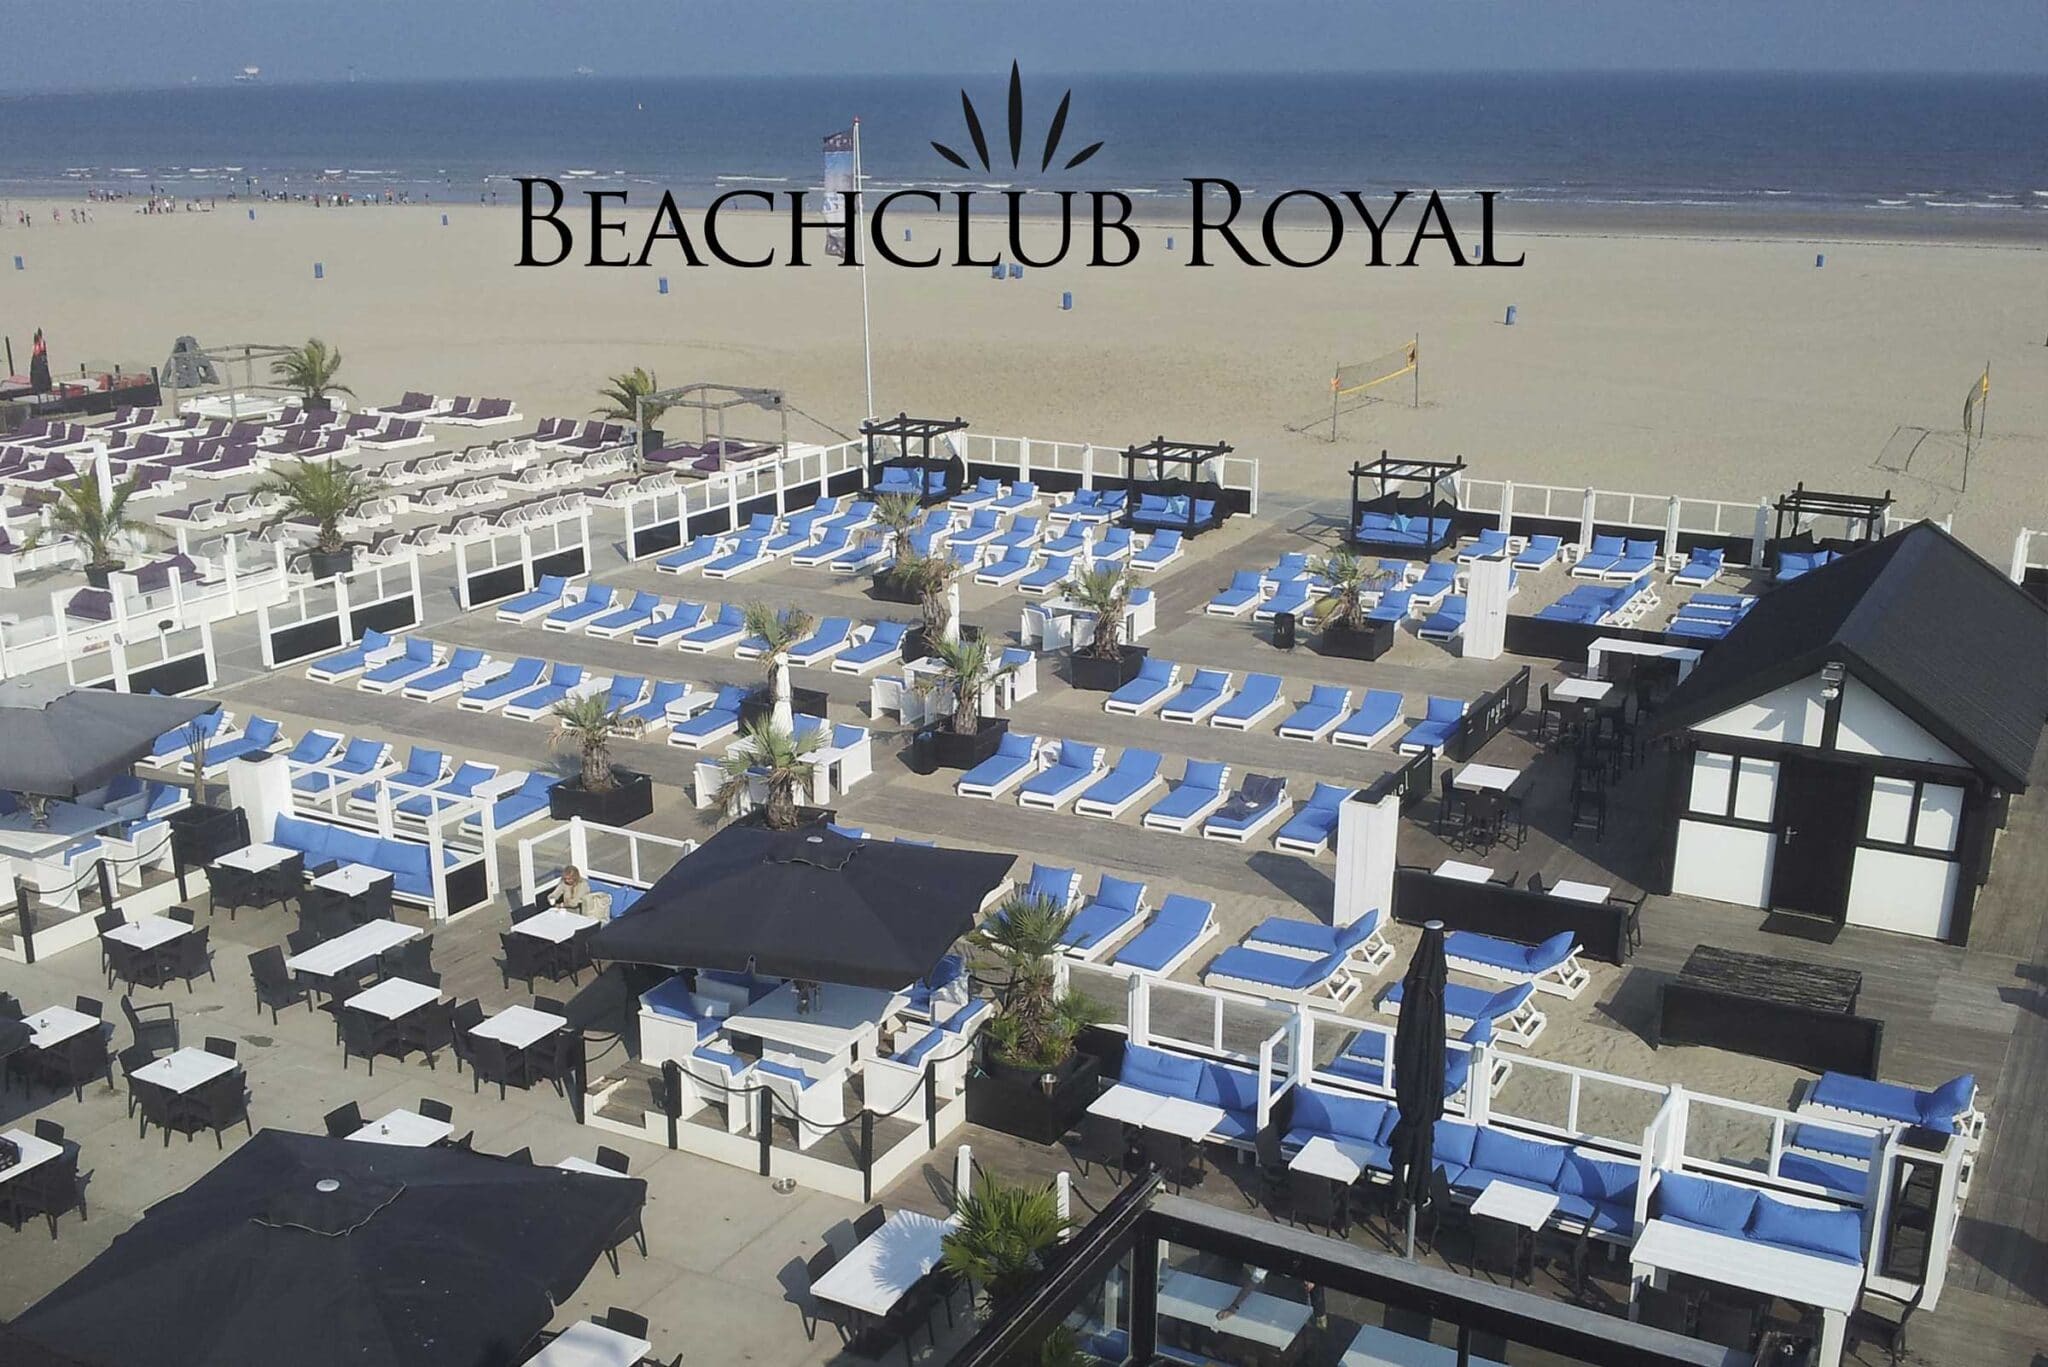 Club de plage royal Sandbeds